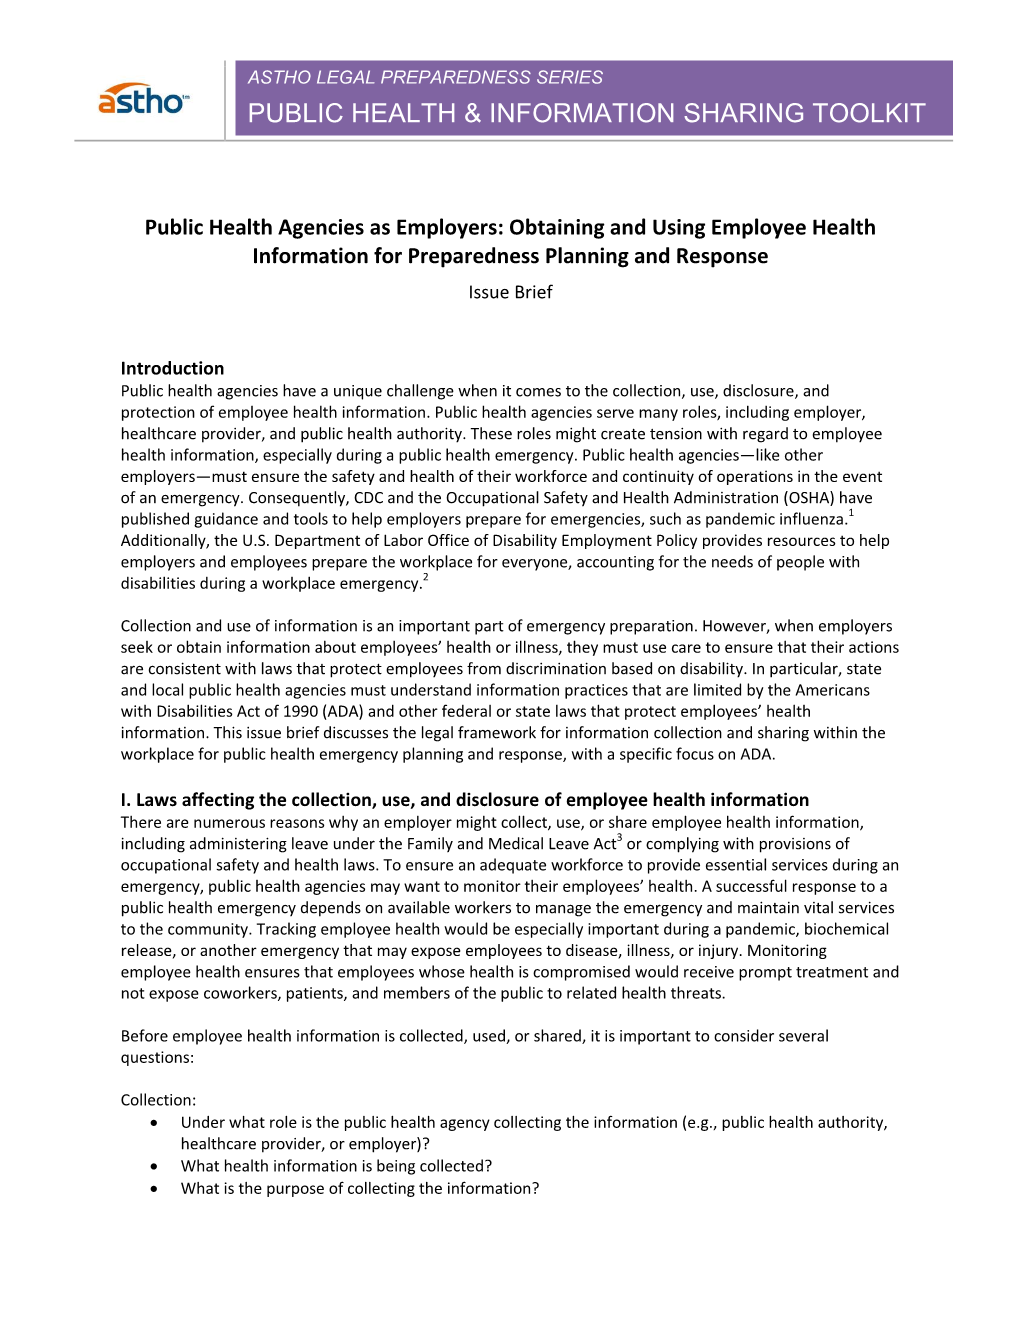 Public Health & Information Sharing Toolkit